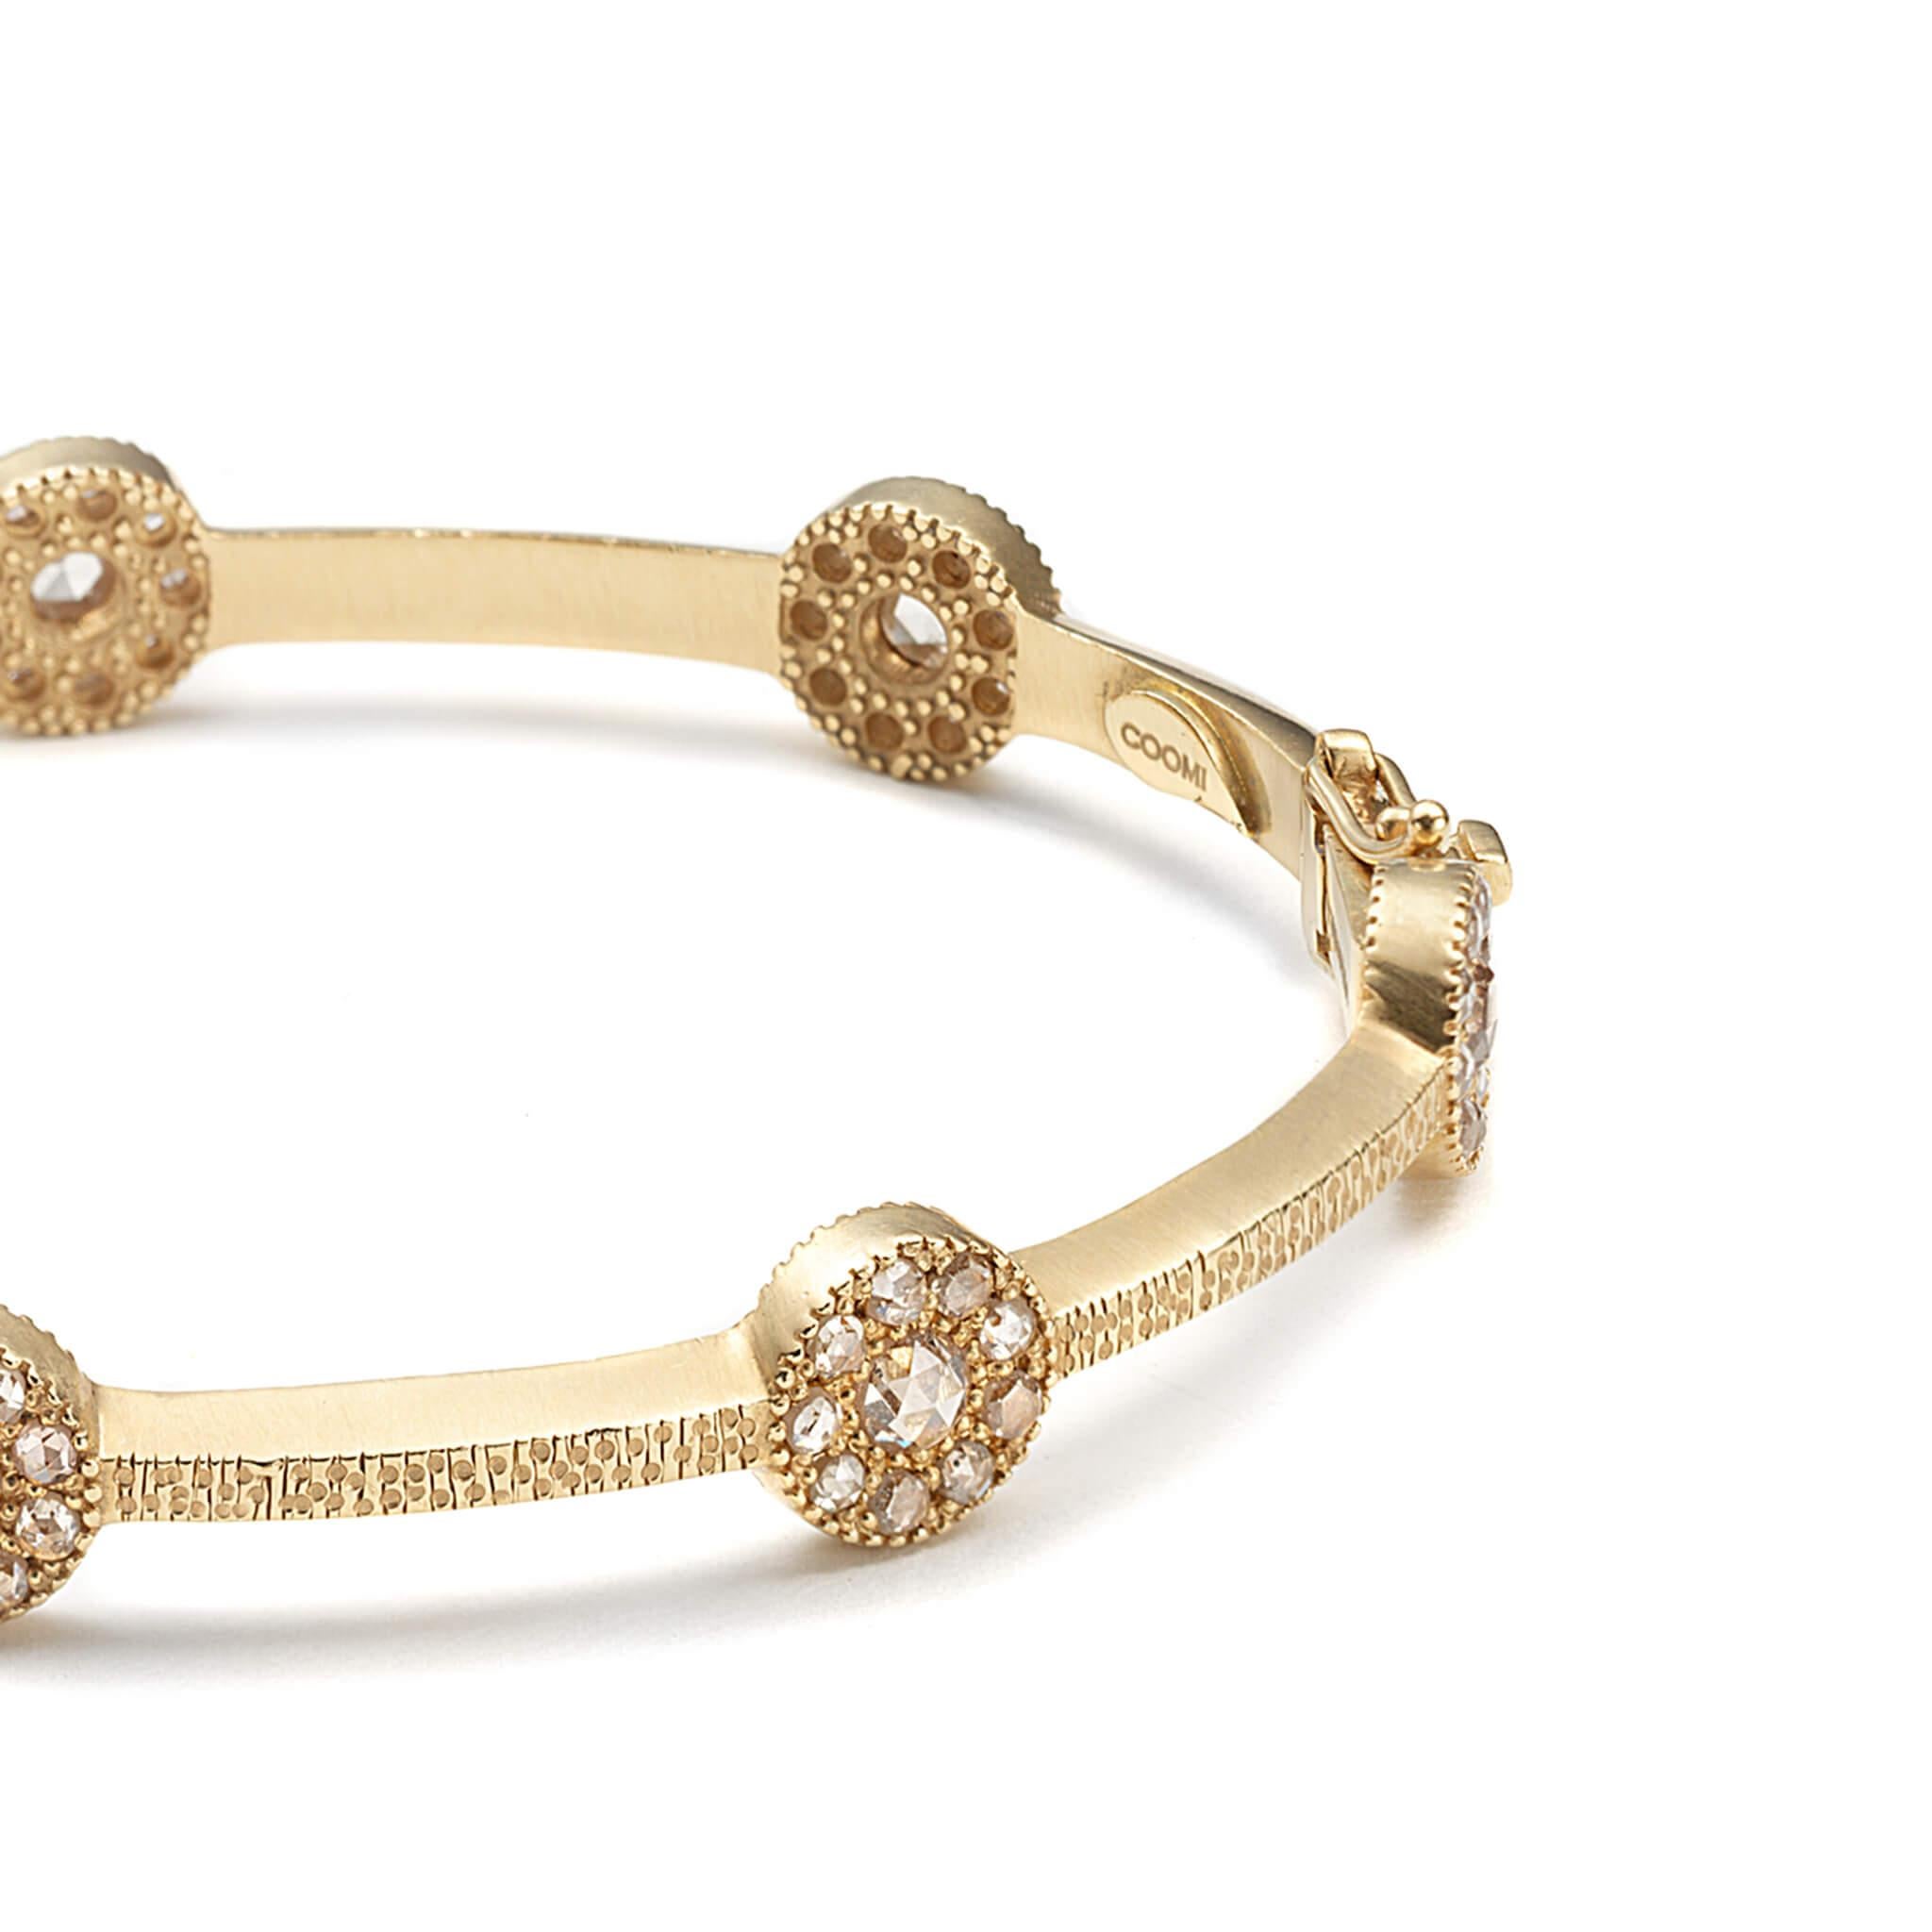 Eternity opera bangle bracelet set in 20K yellow gold with 2.15cts diamond.
